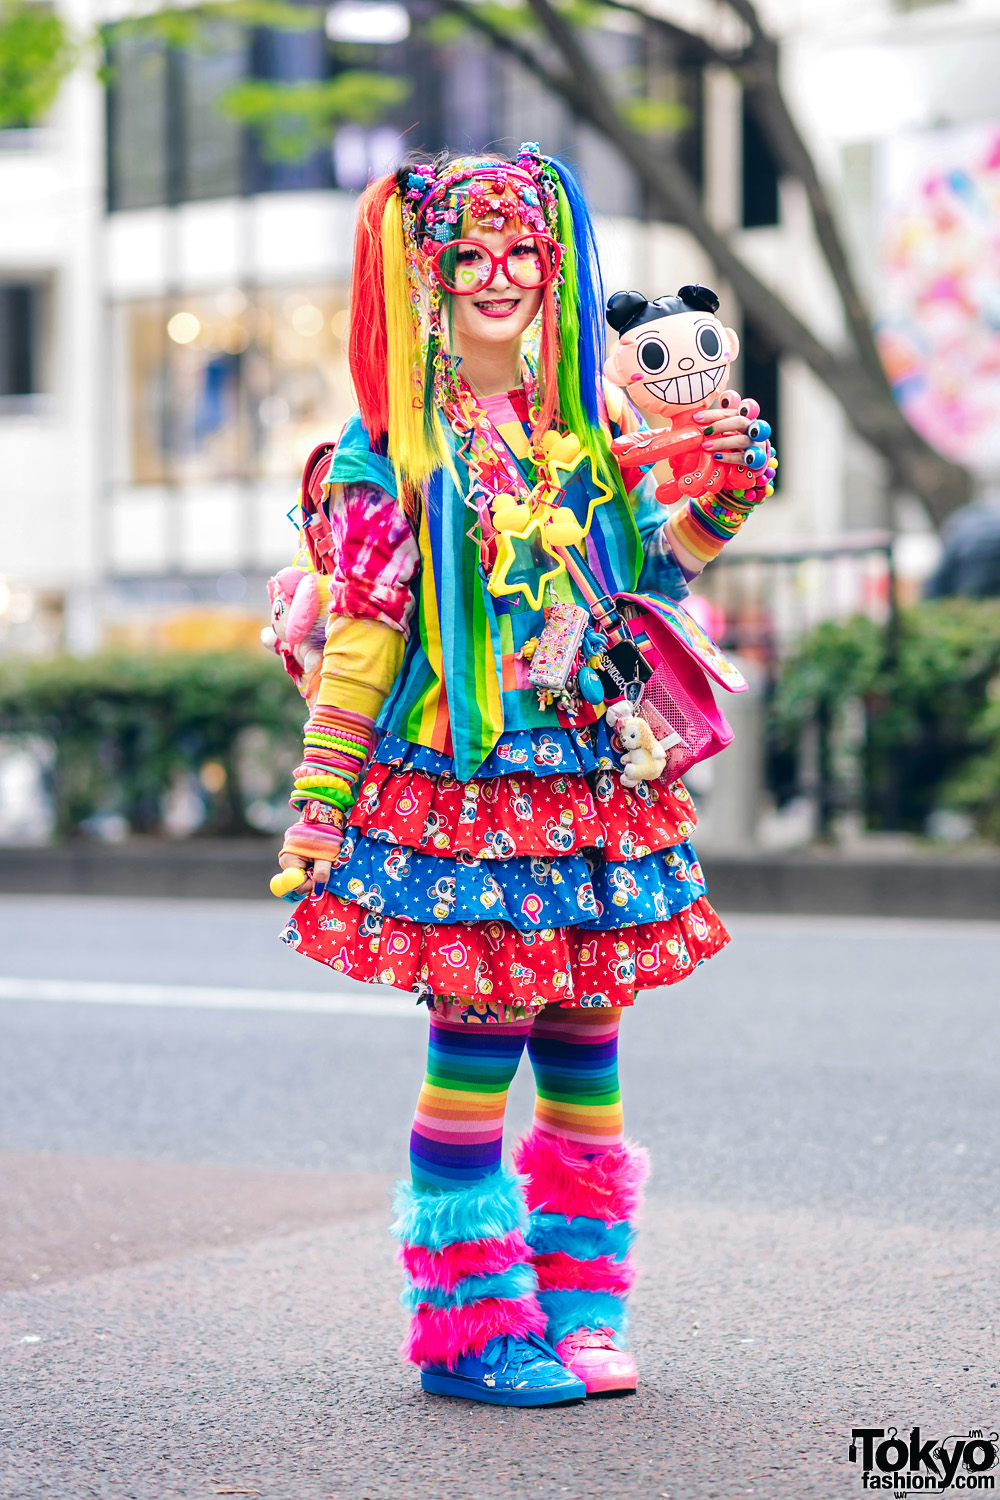 Rainbow Decora Style in Harajuku w/ Handmade Clothing, Tiered Skirt, Tomoe Shinohara Doll, Furry Leg Warmers, Care Bears, Sailor Moon & Decora Accessories